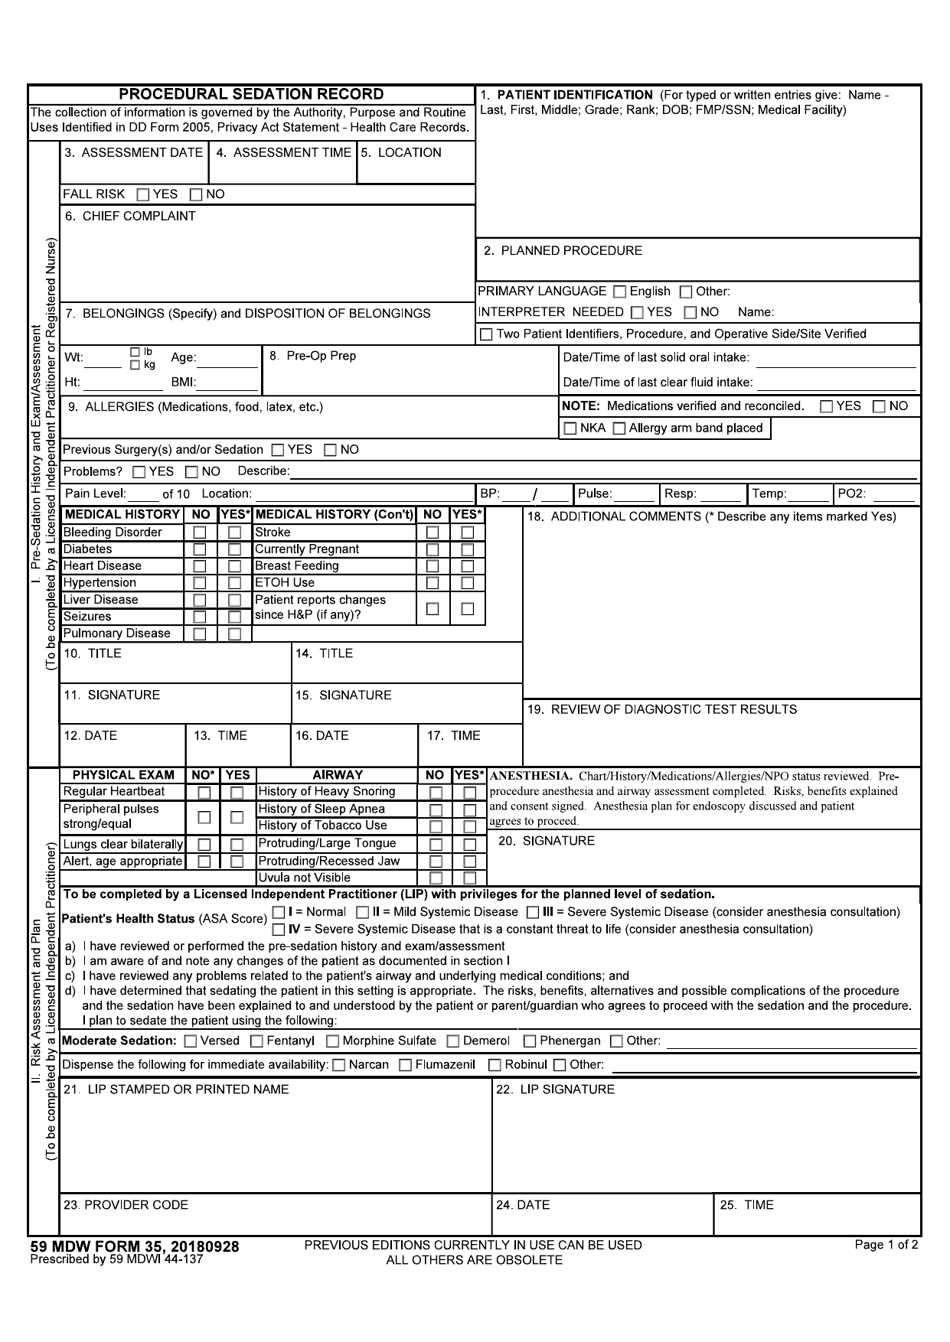 59 MDW Form 35 Procedural Sedation Record, Page 1